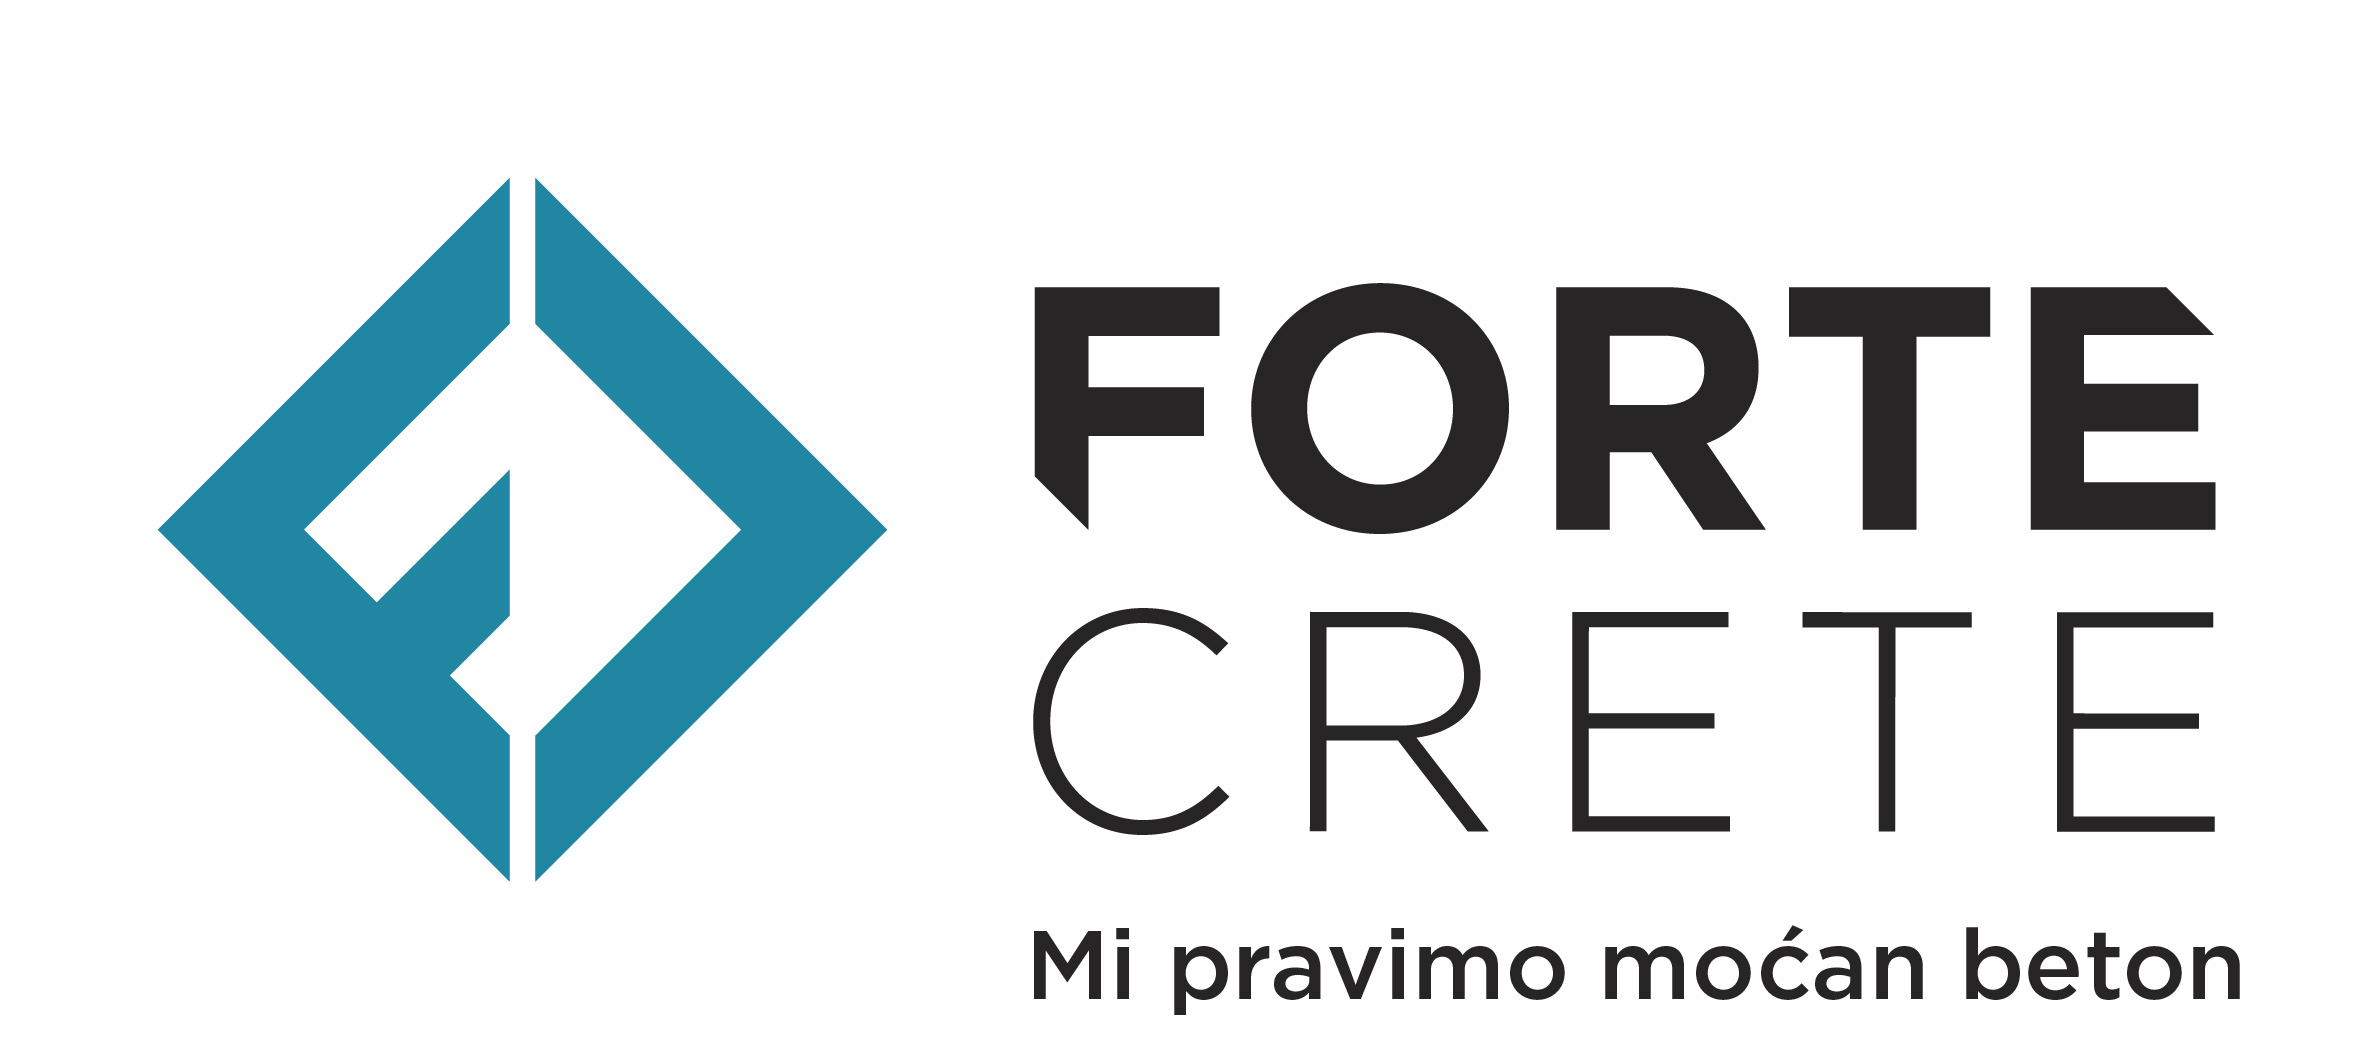 ForteCrete logo